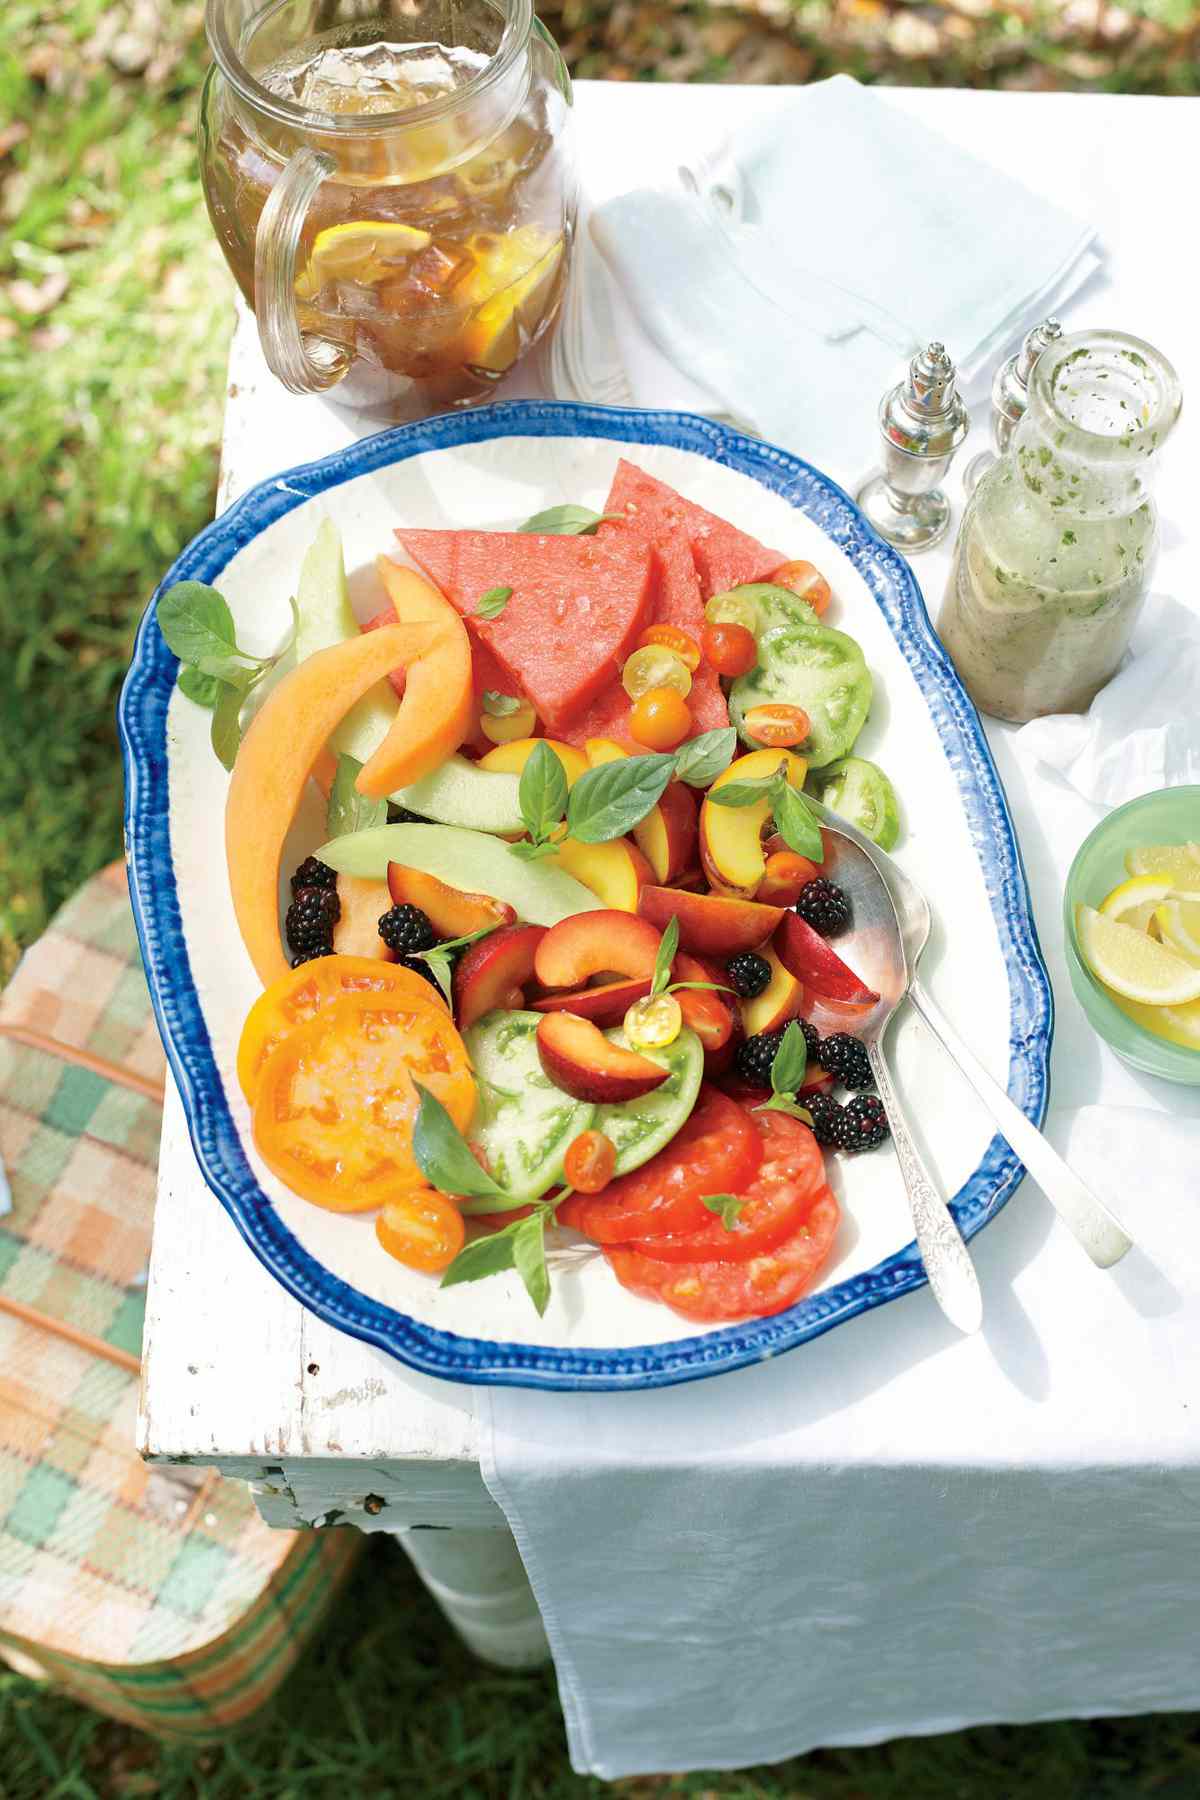 Tomato-and-Fruit Salad